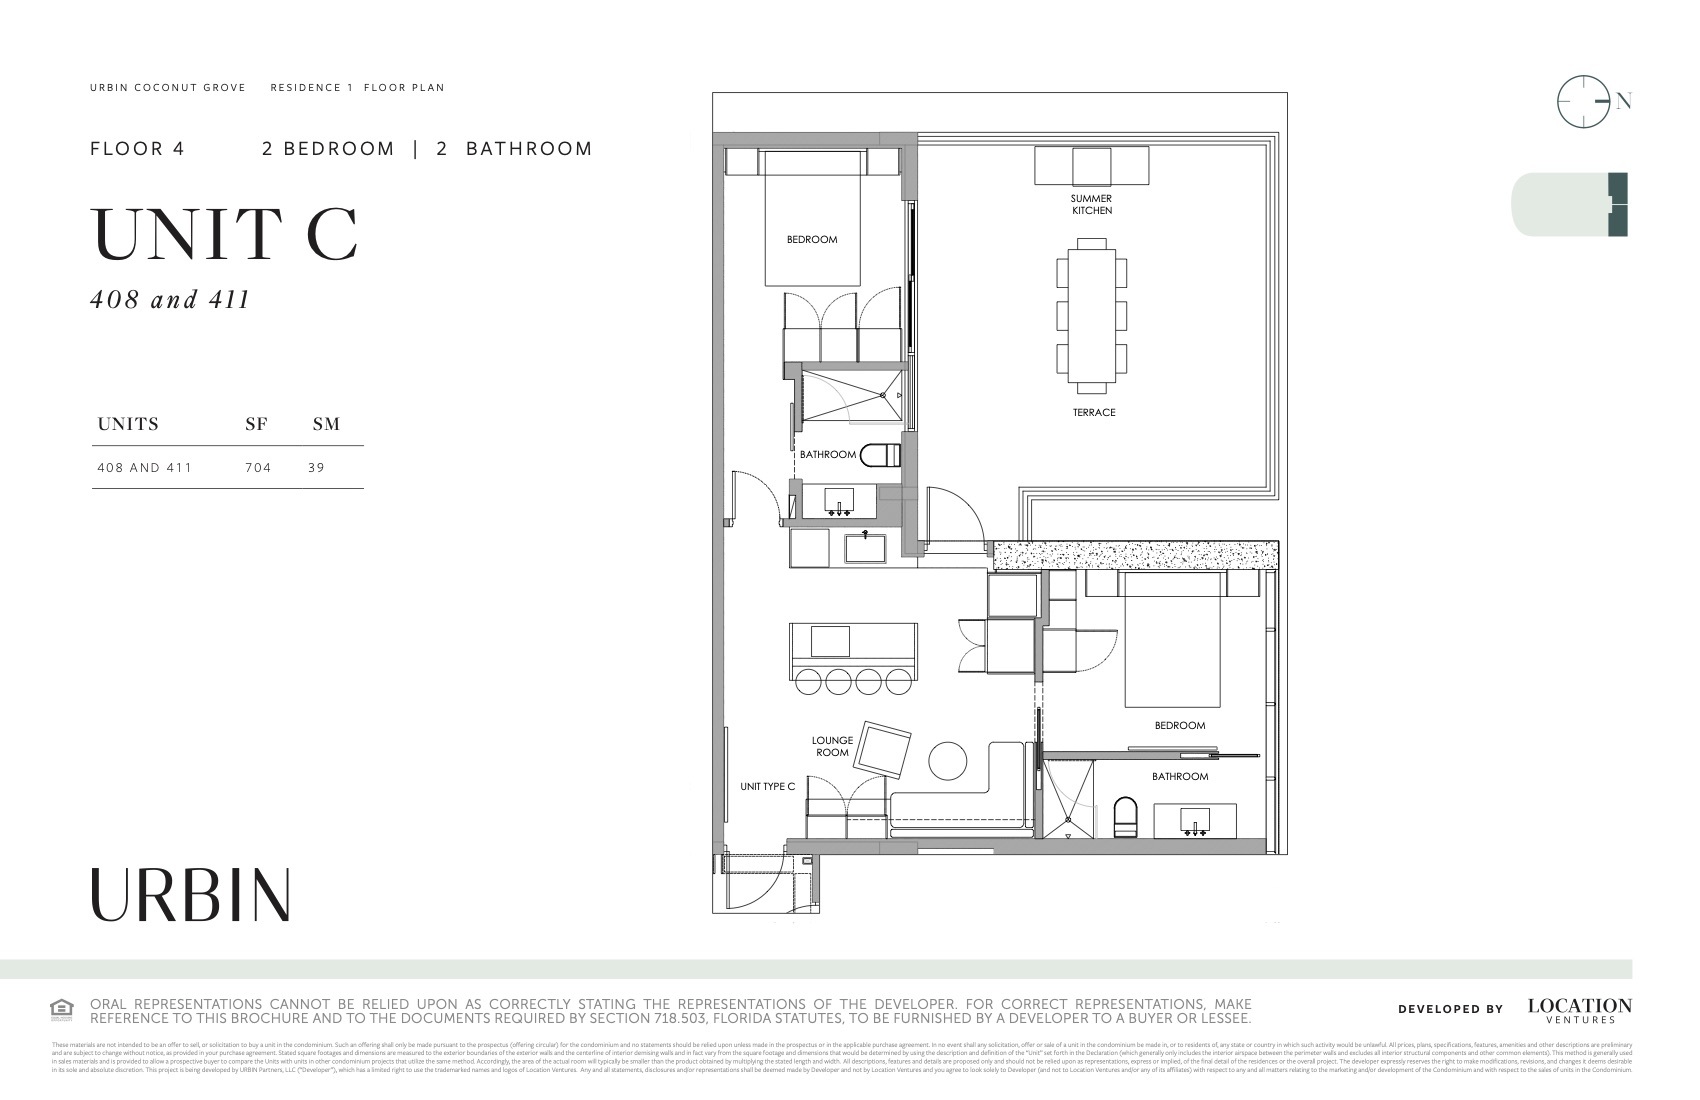 Floor Plan for Urbin Coconut Grove Floorplans, Unit C